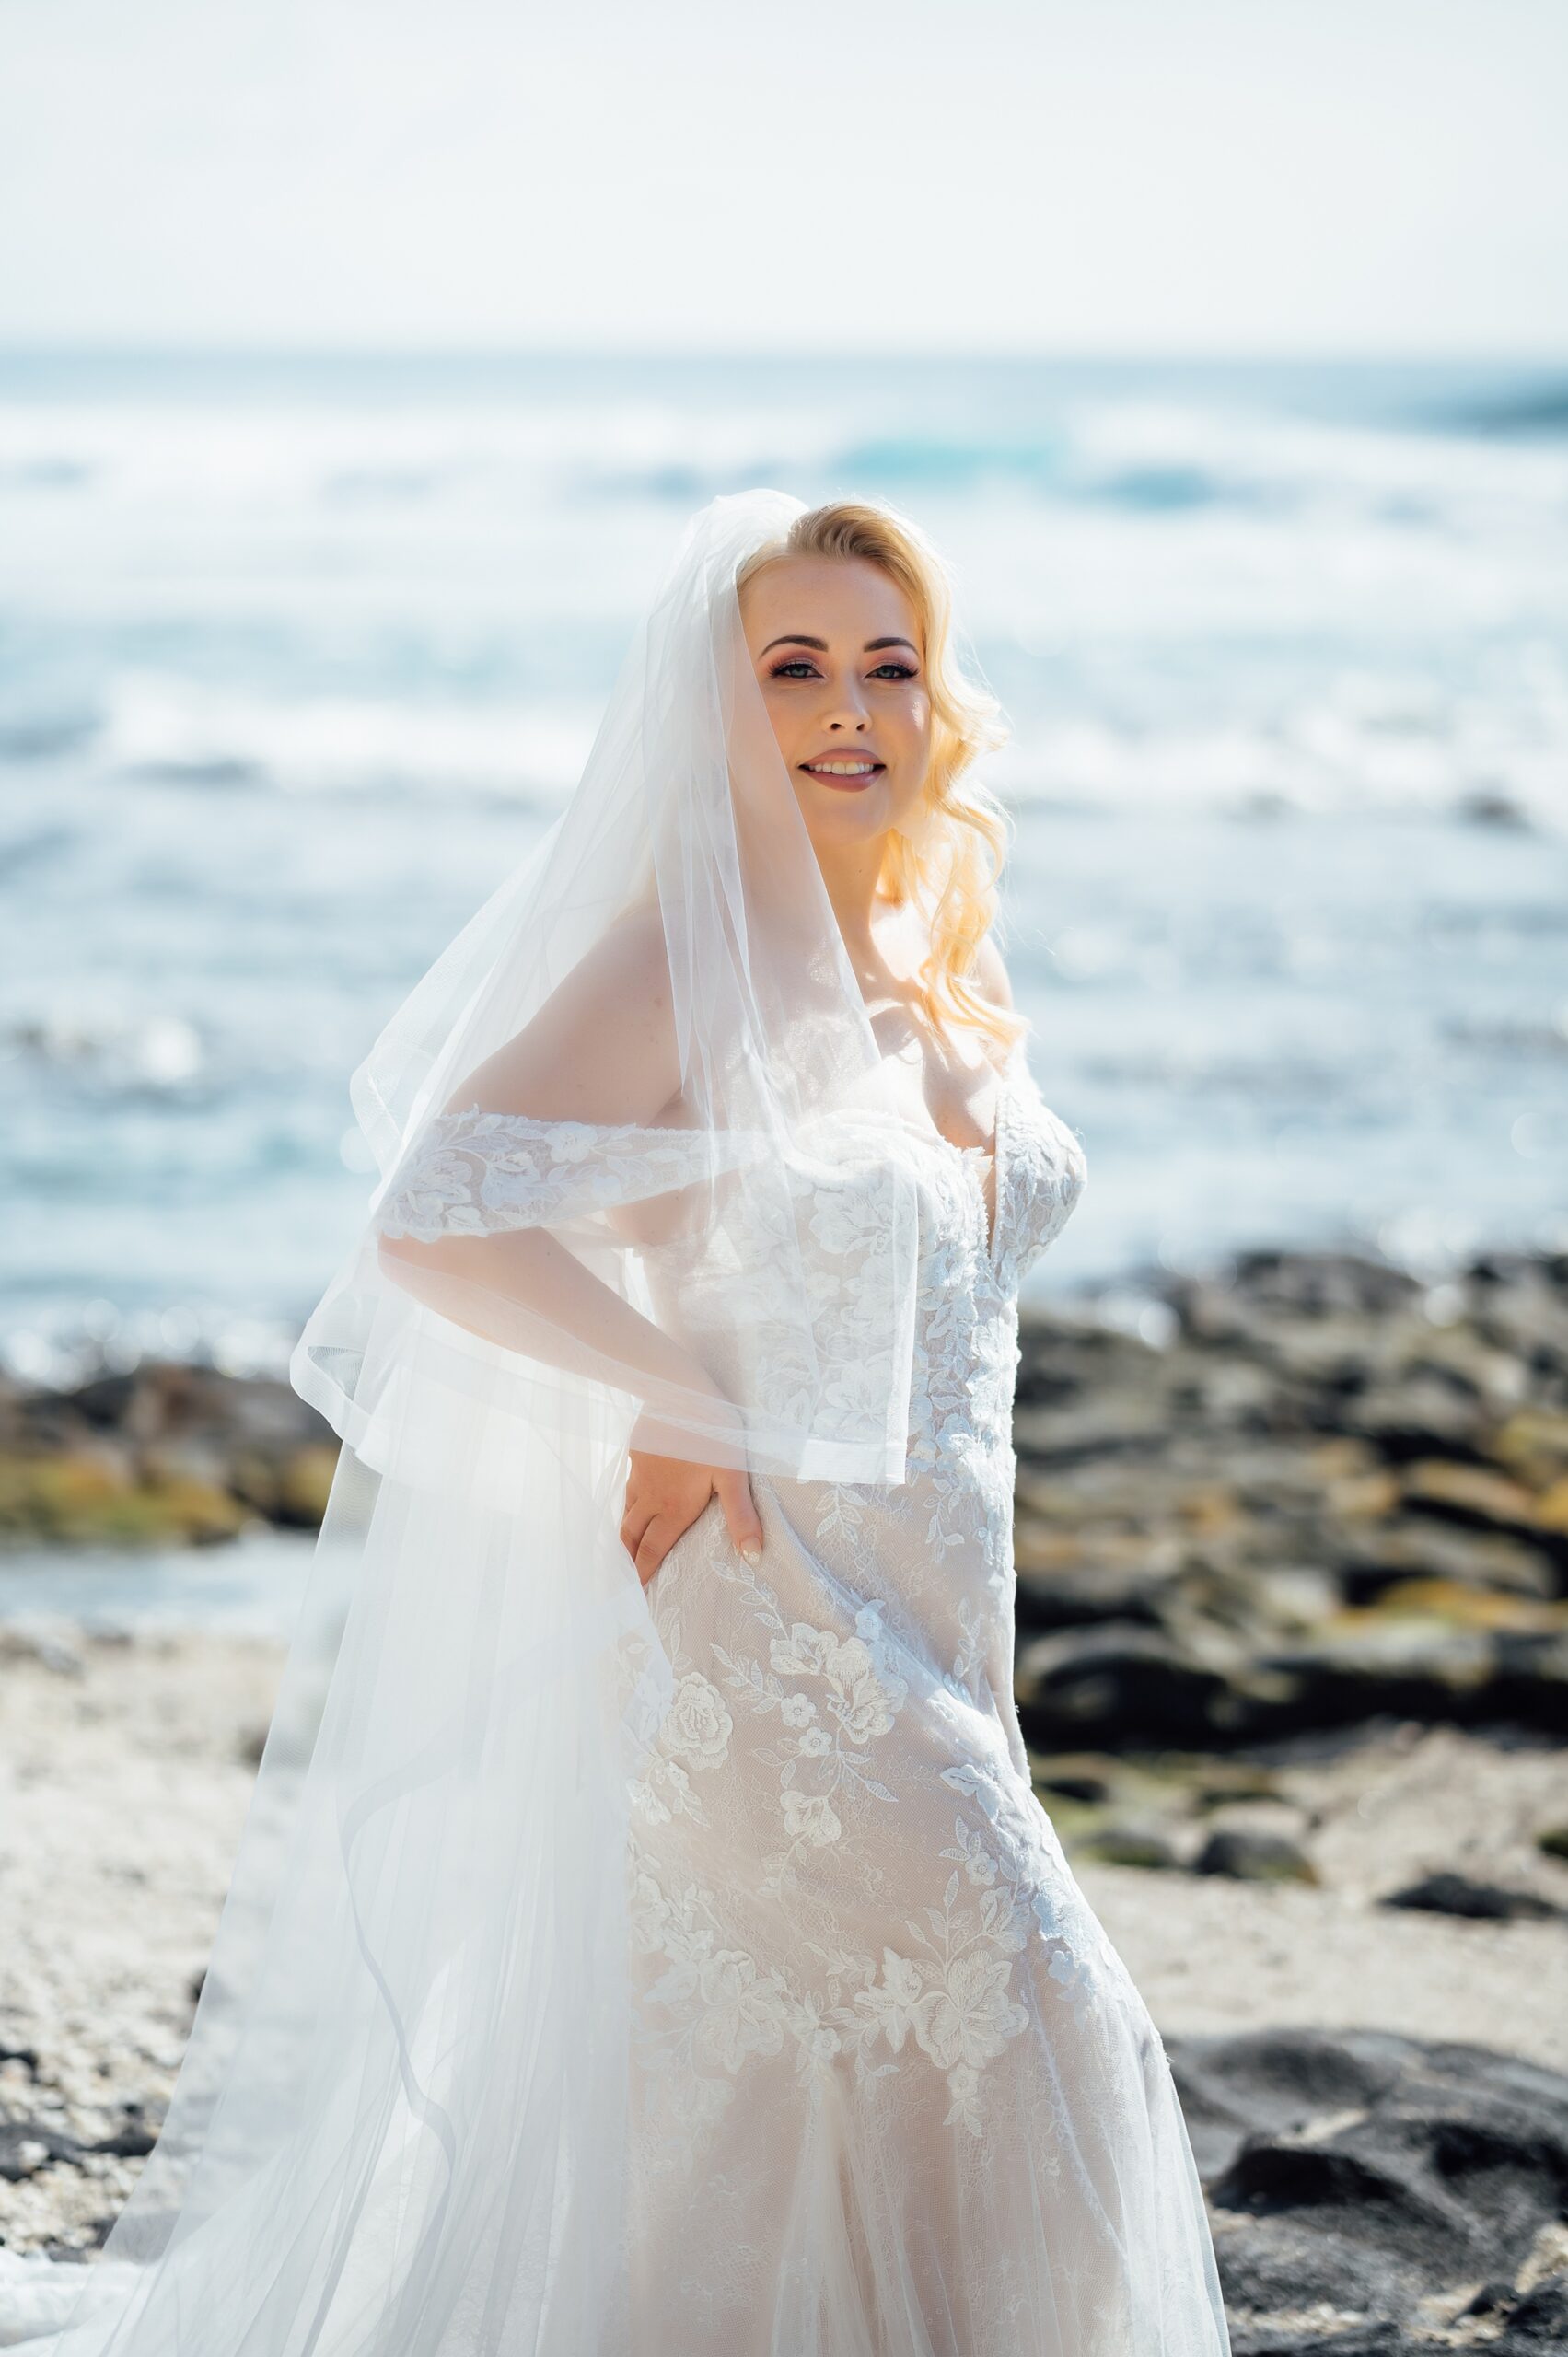 gorgeous bride at the beach by Kona wedding photographer